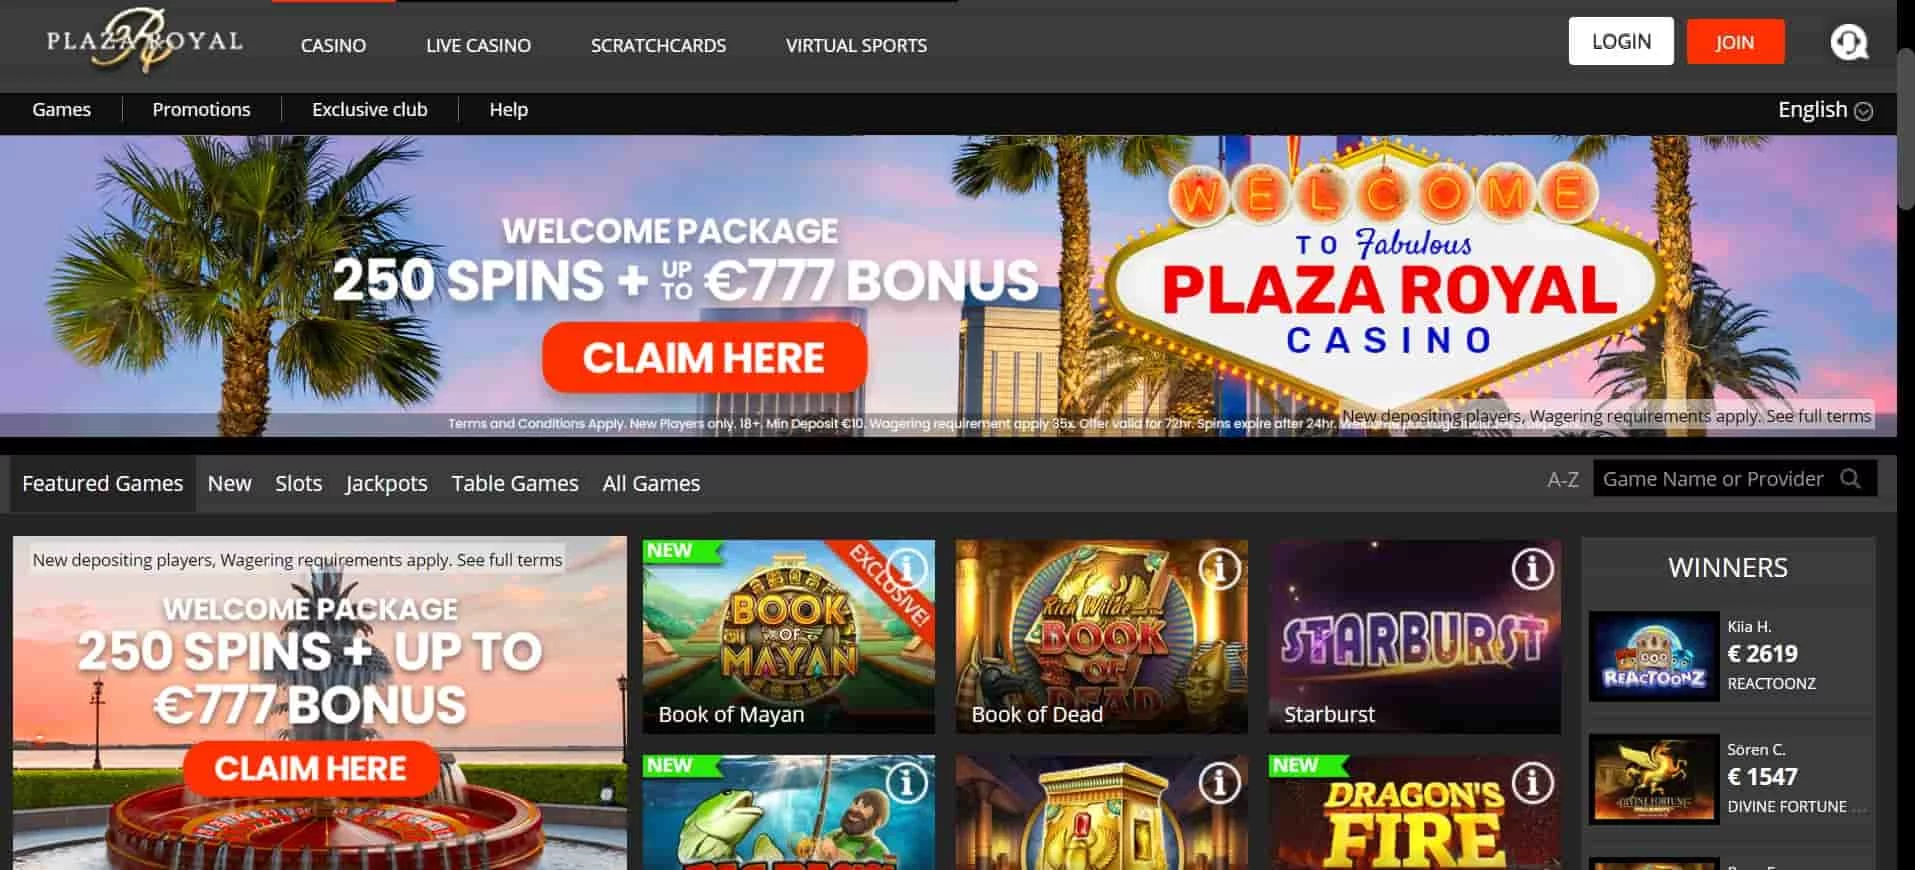 plaza royal casino home page-min